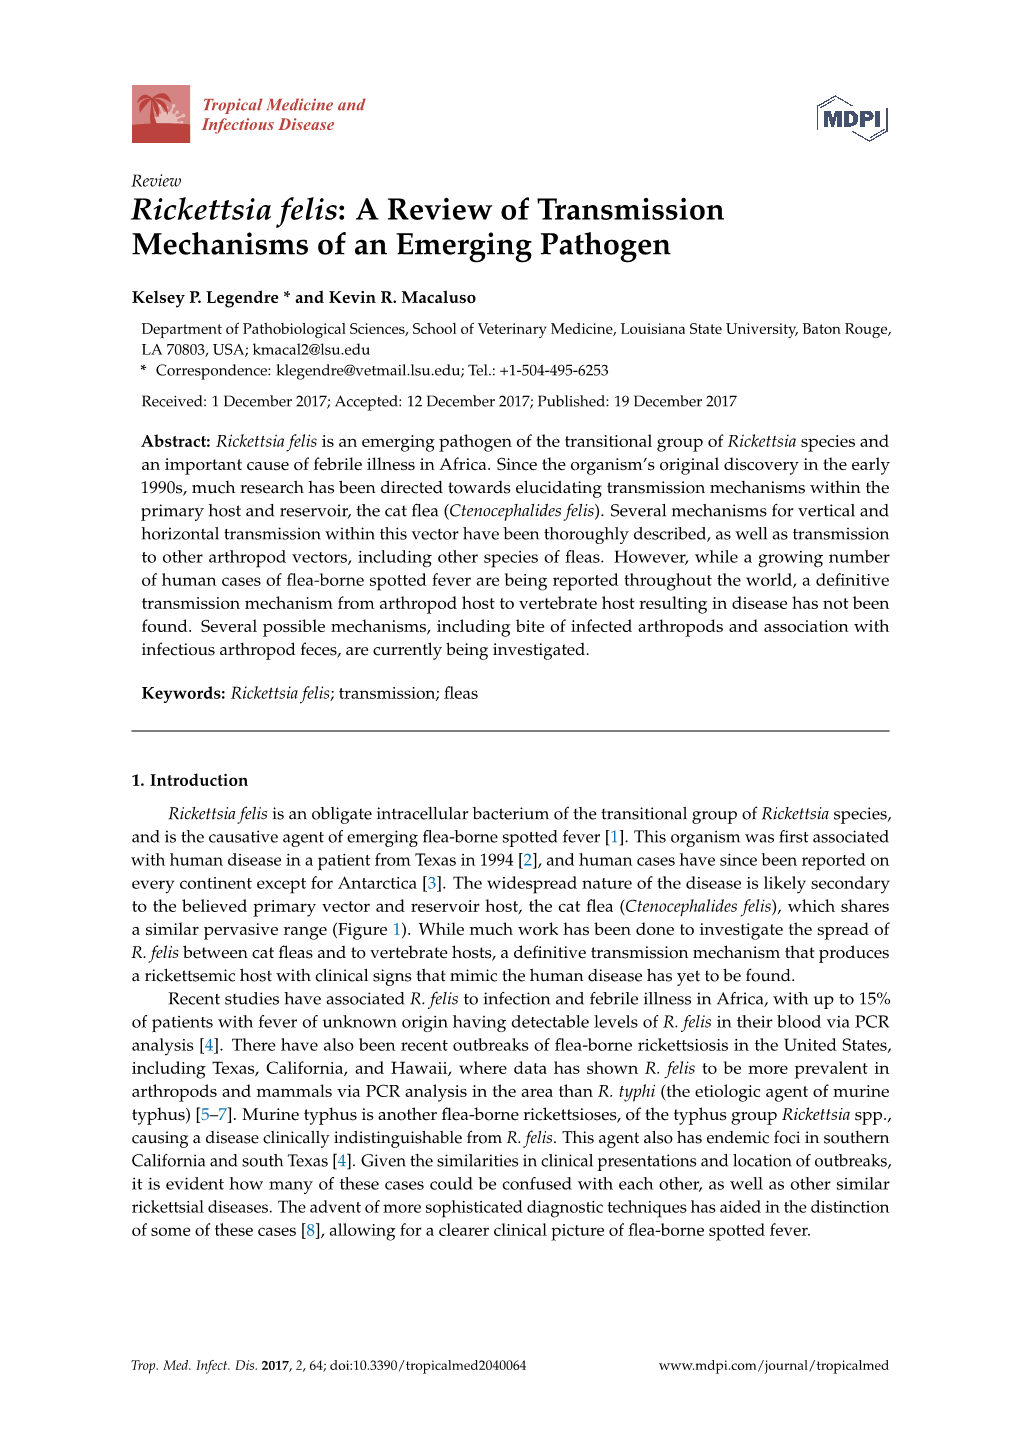 Rickettsia Felis: a Review of Transmission Mechanisms of an Emerging Pathogen